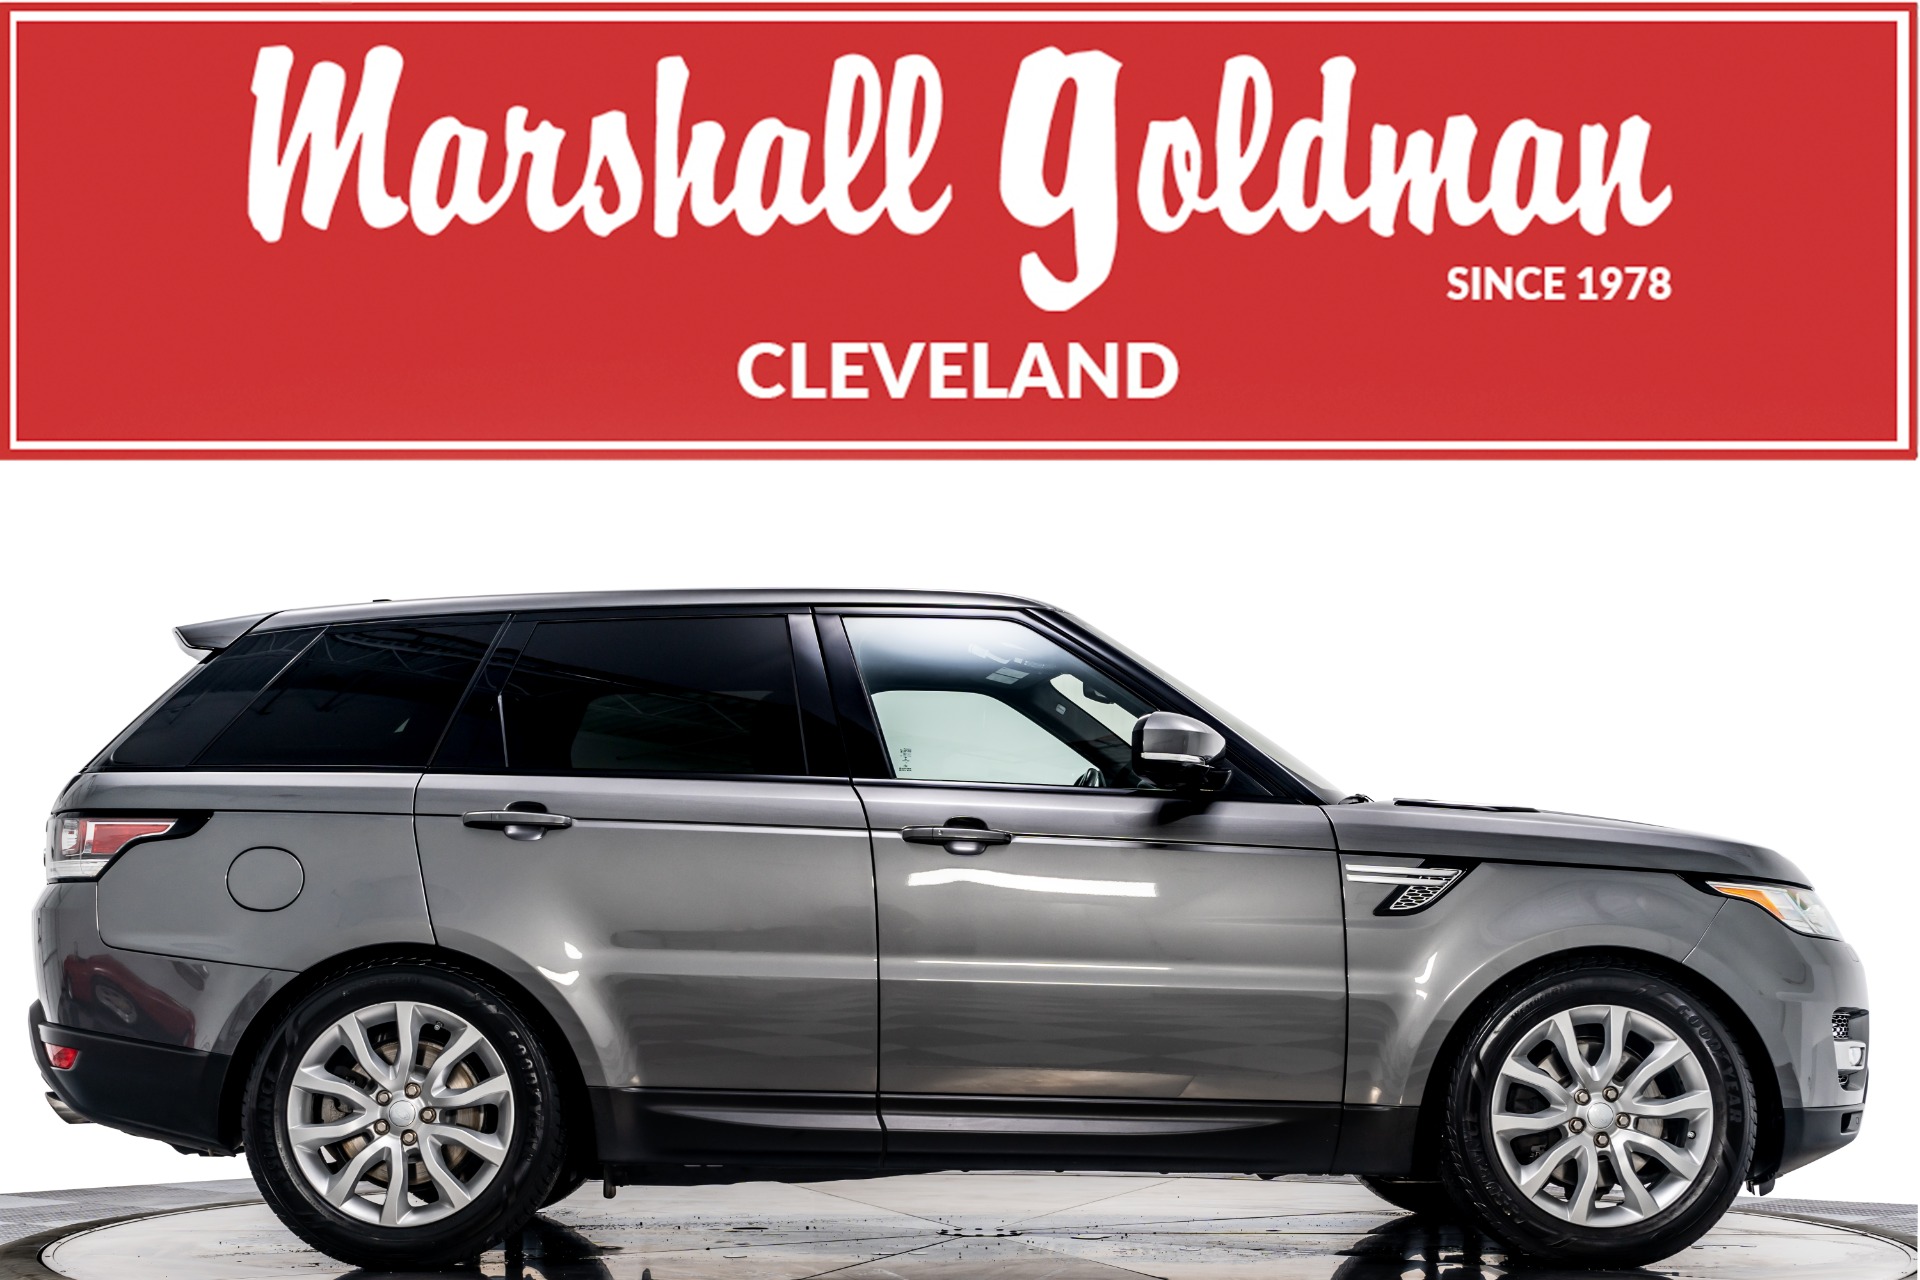 Used 2016 Land Rover Range Rover Sport HSE (Sold) | Marshall Goldman Cleveland Stock #WLRRSHSE